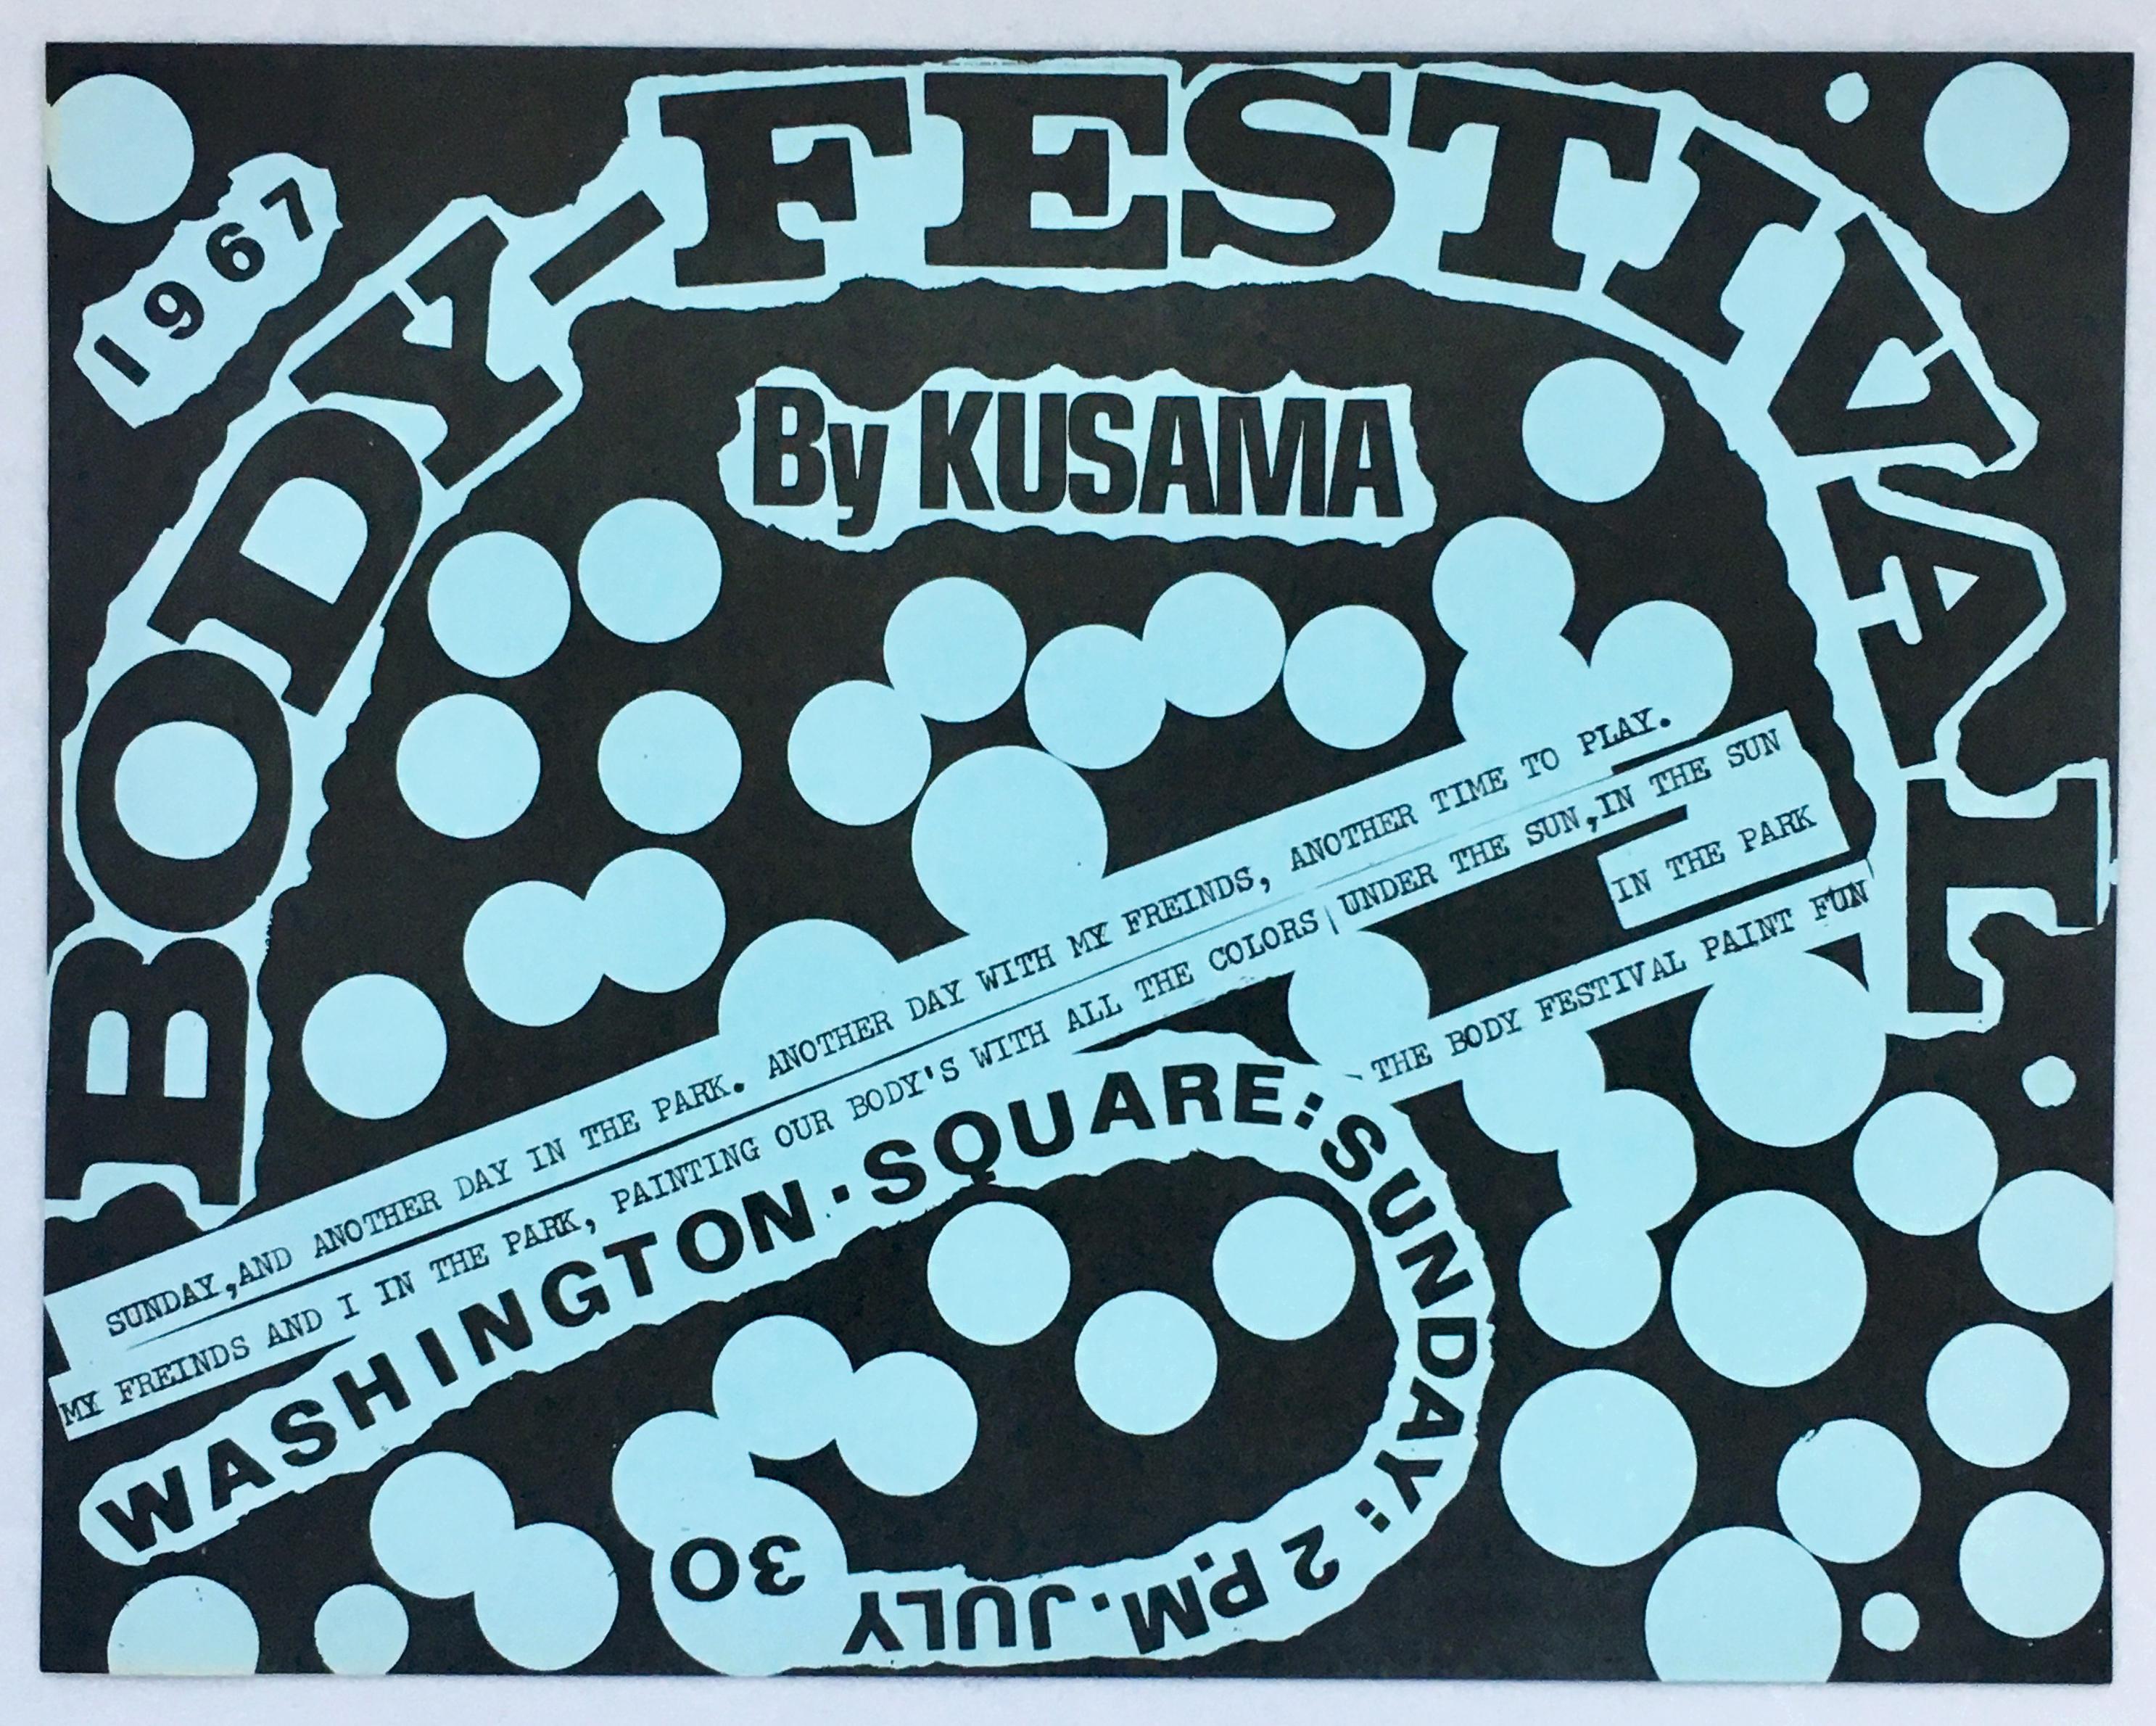 Body-Festival by Kusama, Washington Square Park (announcement) - Print by Yayoi Kusama